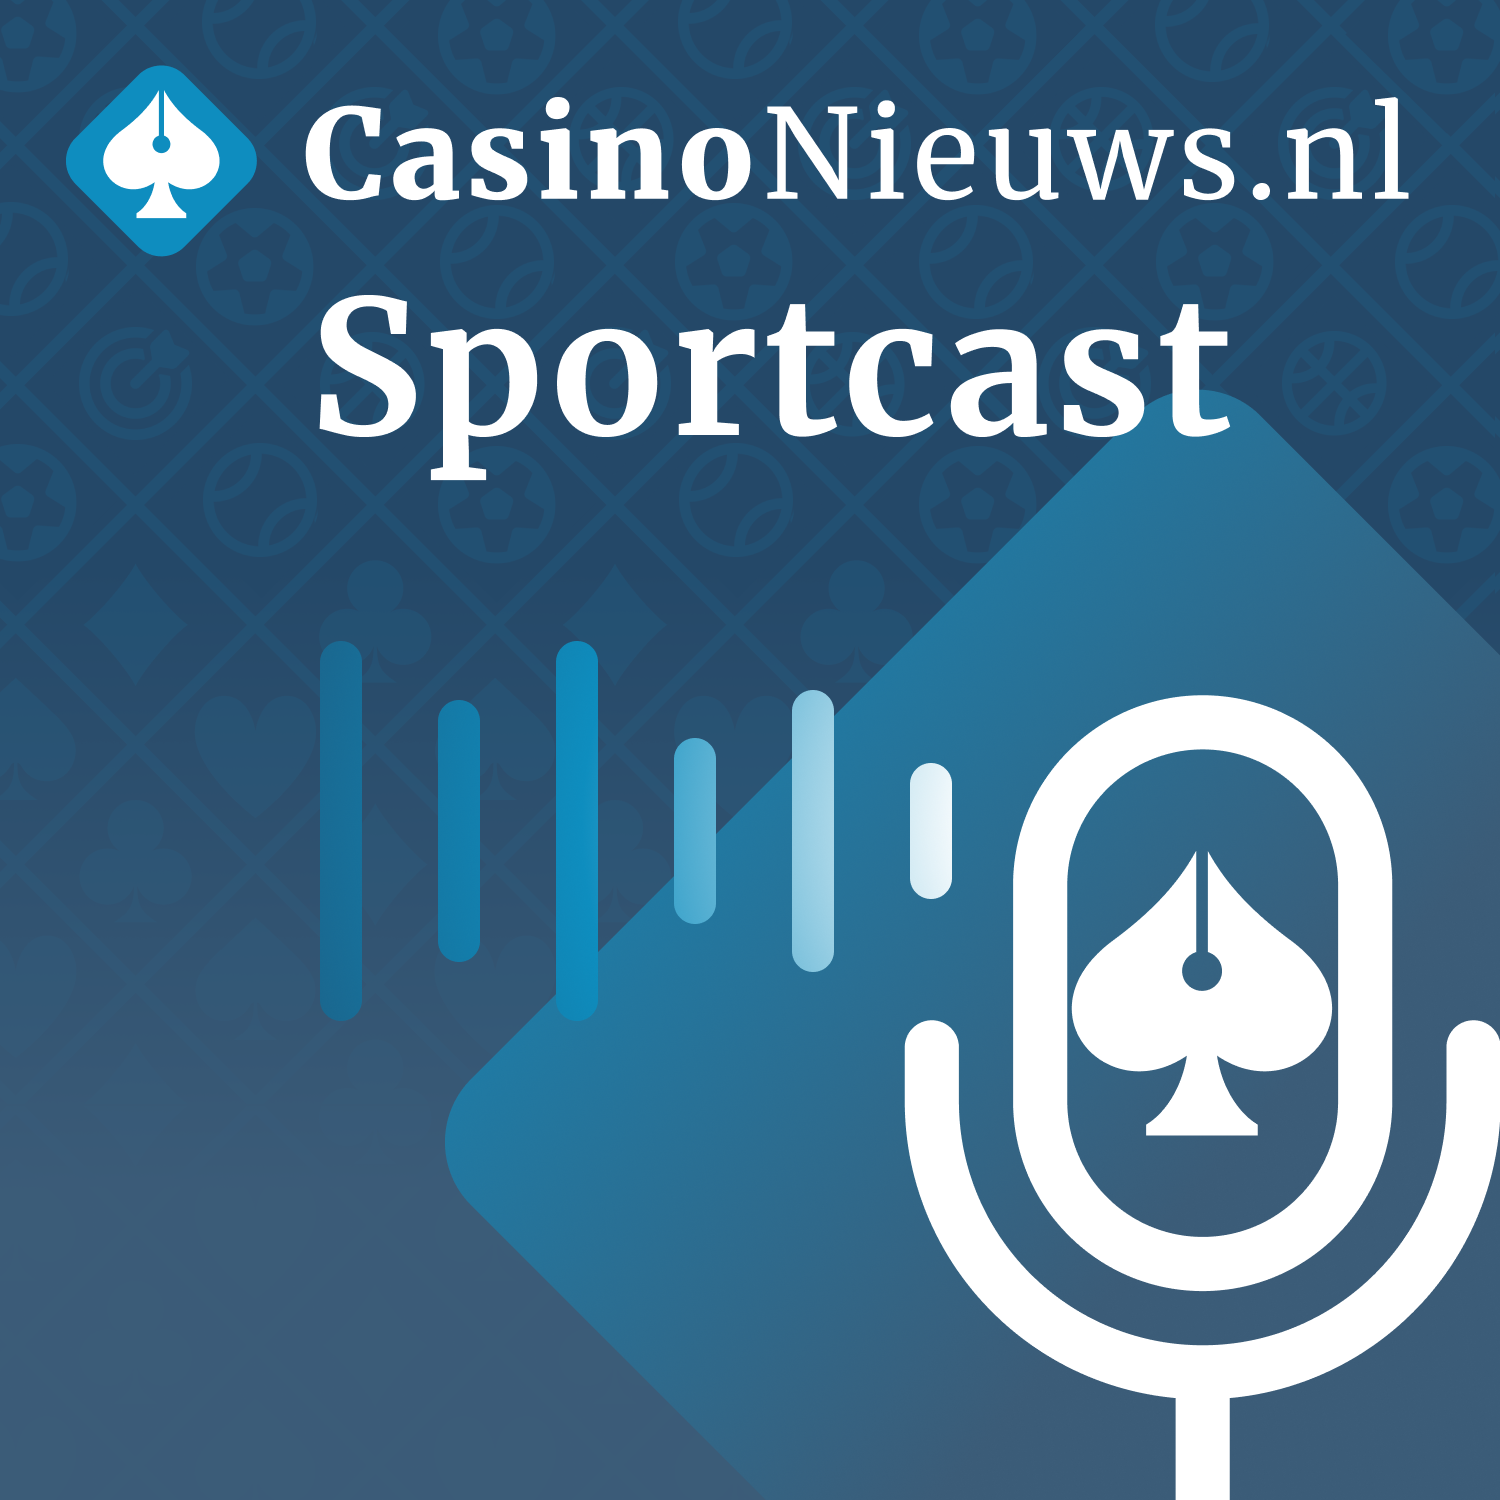 CasinoNieuws.nl Sportcast